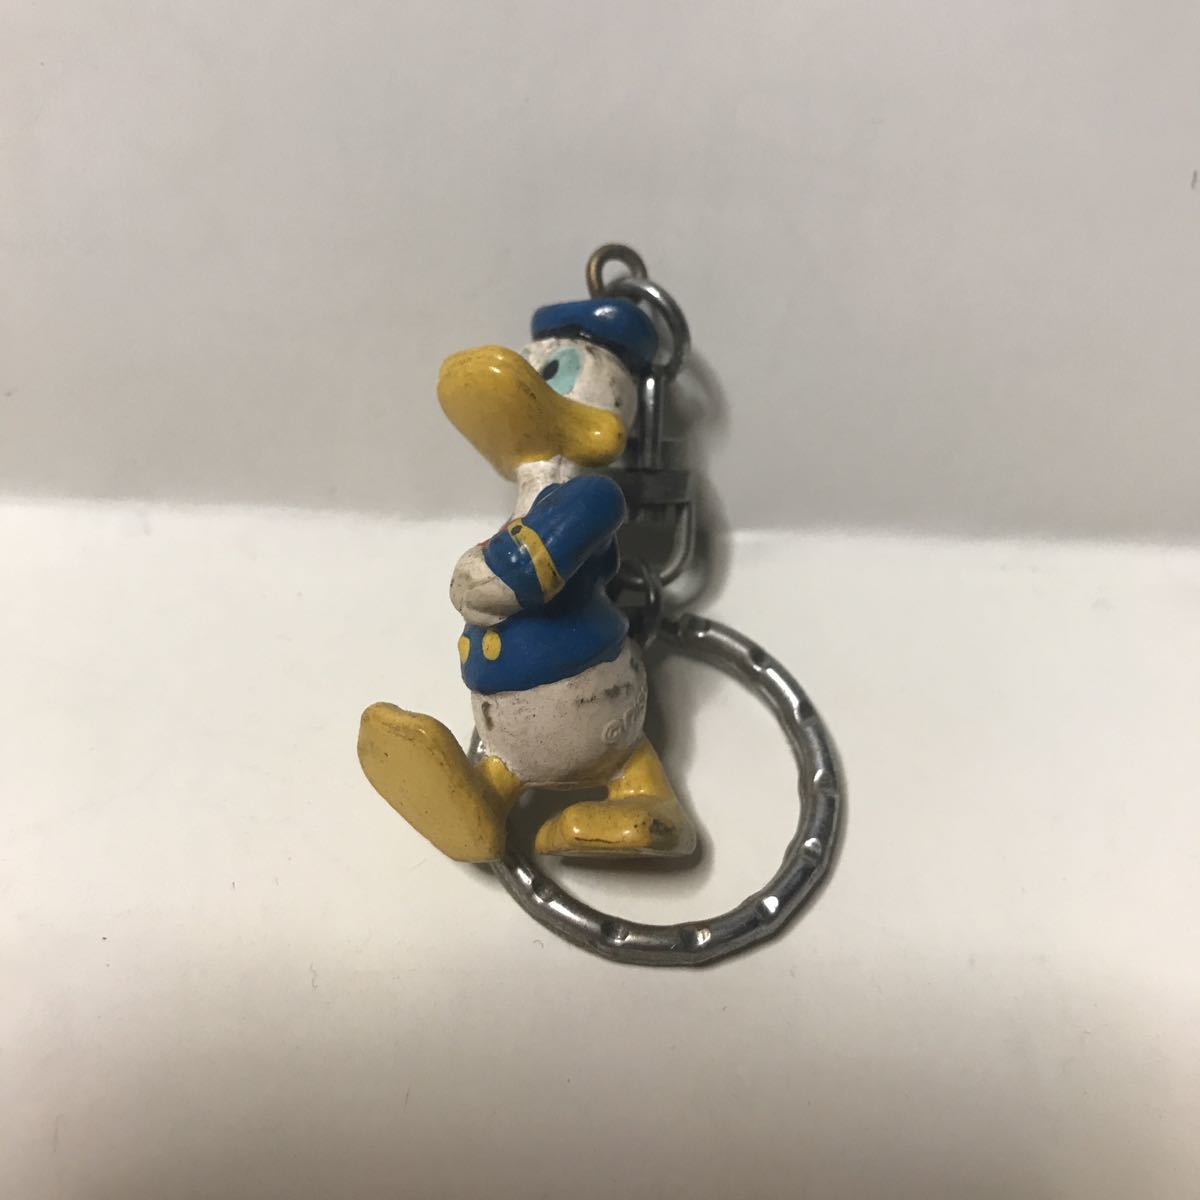  Donald Duck figure key holder Disney Disney